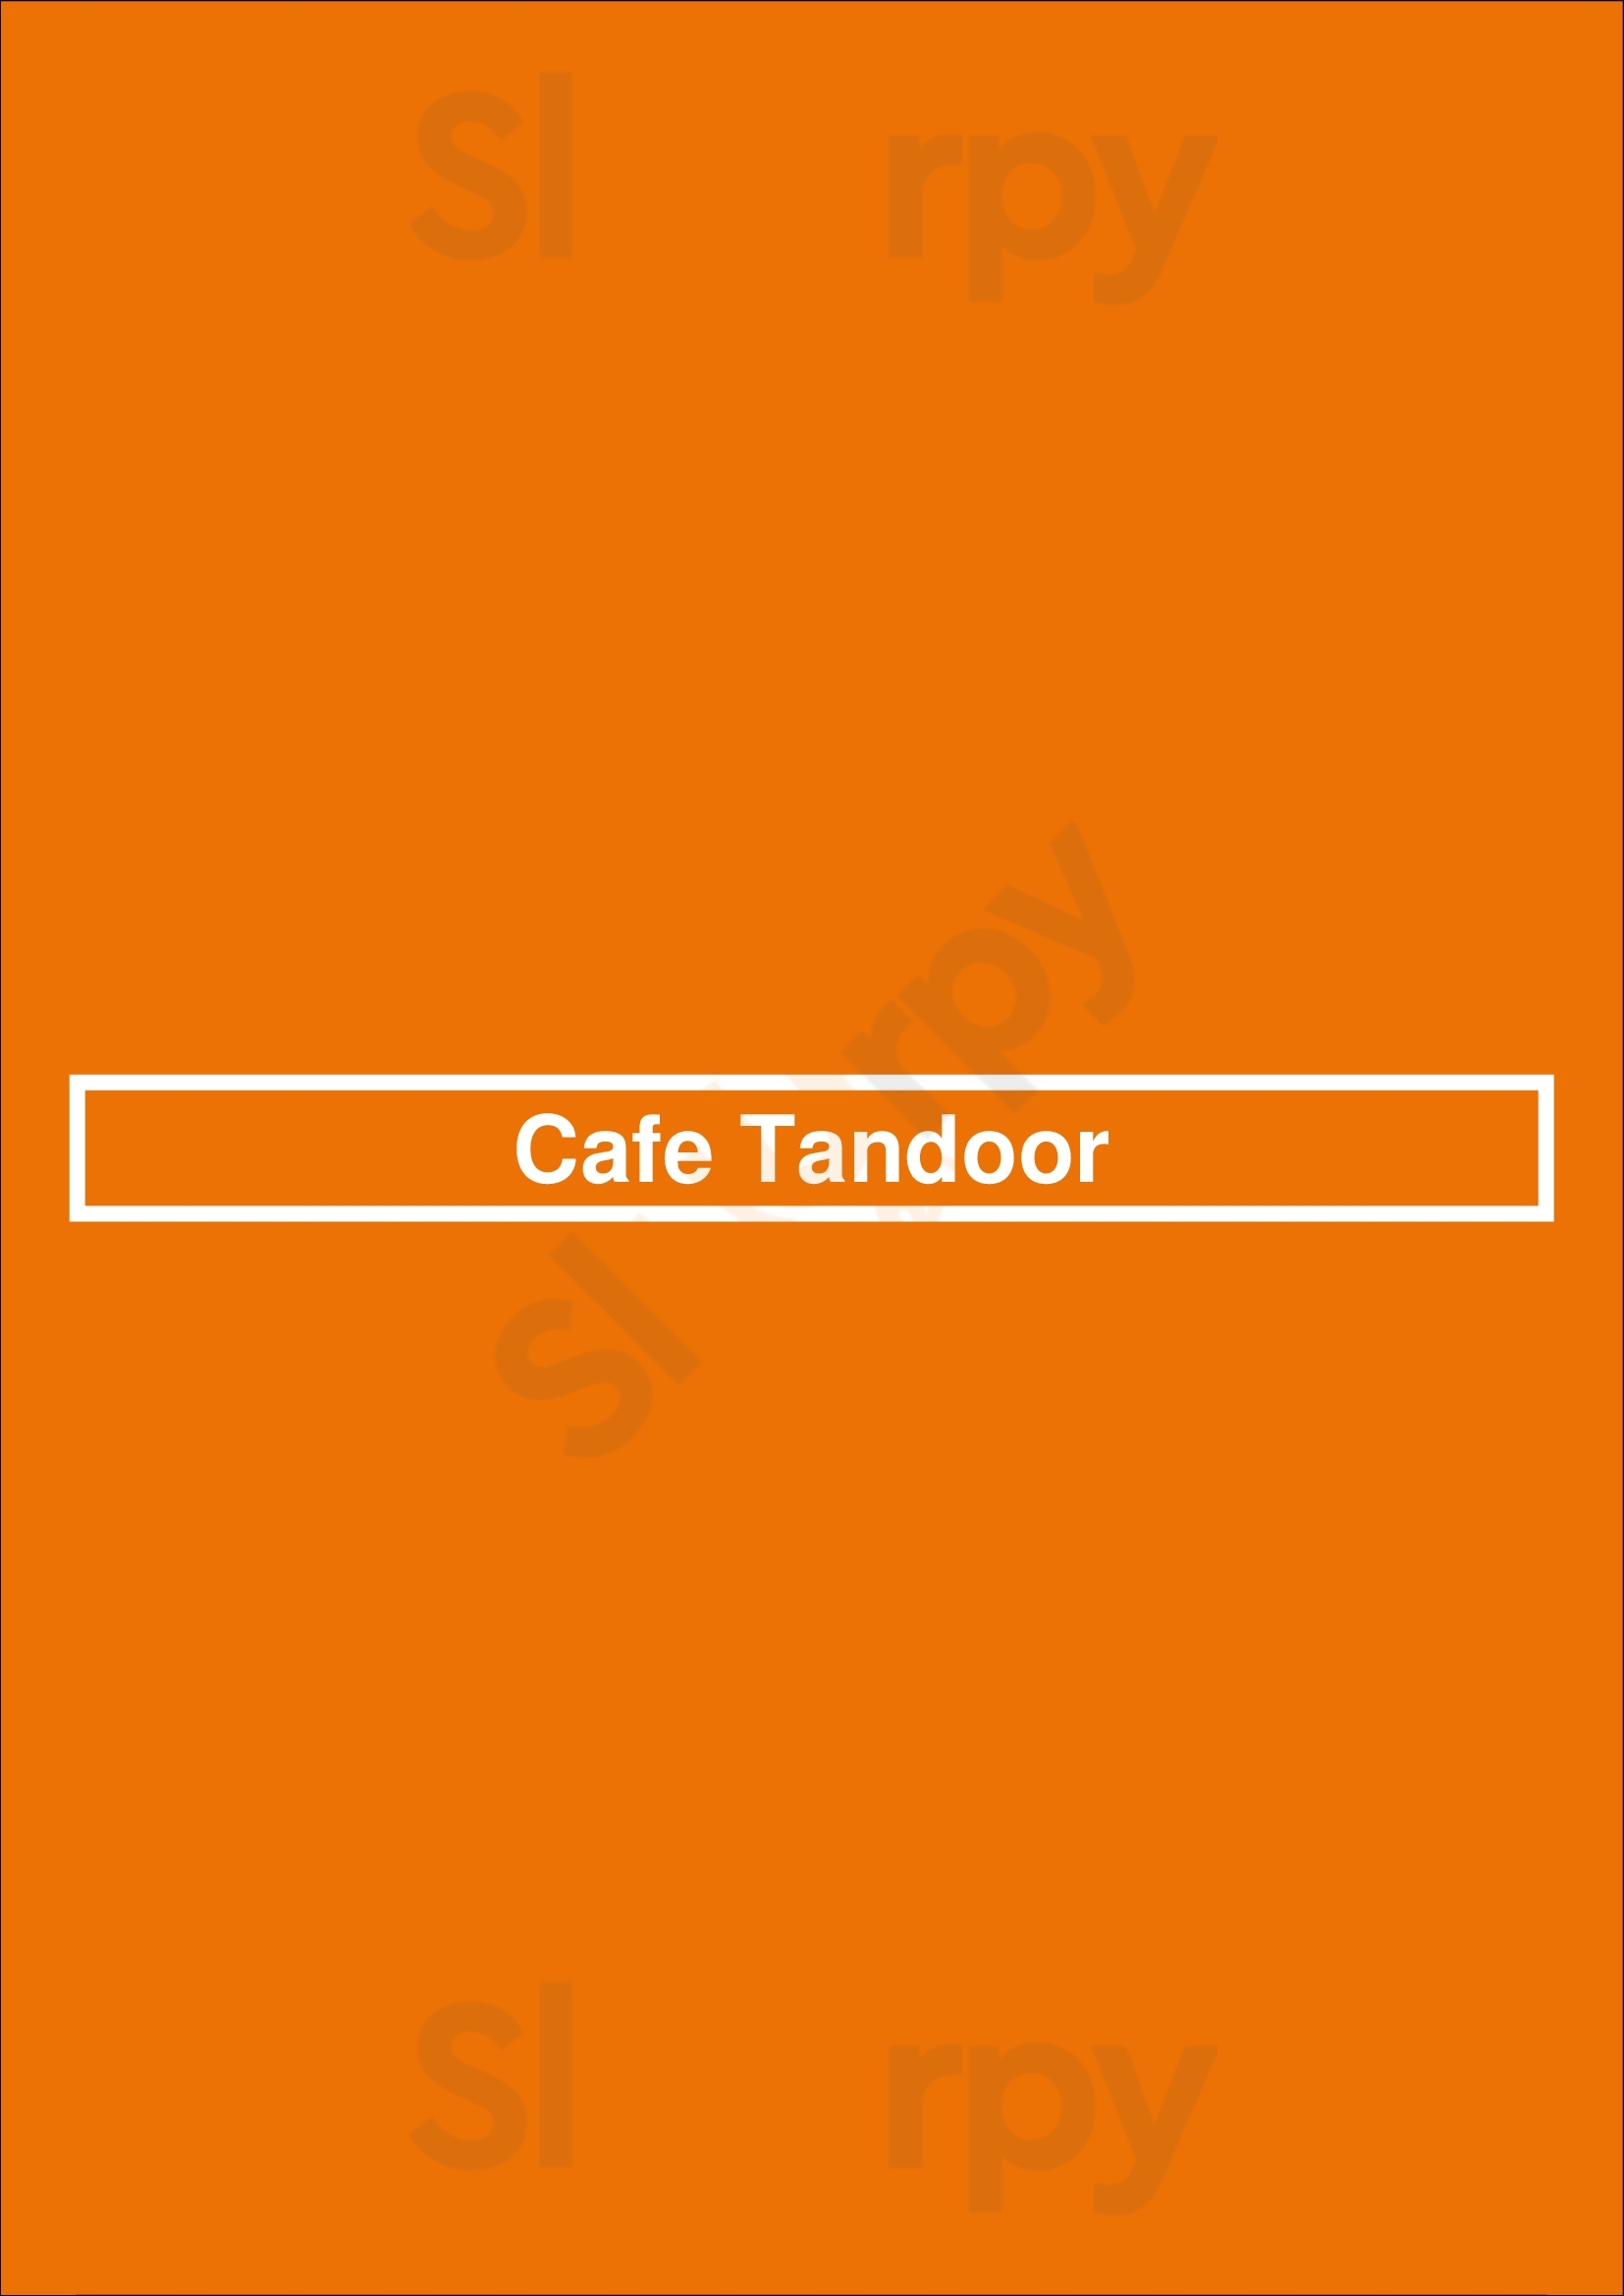 Cafe Tandoor Cleveland Menu - 1